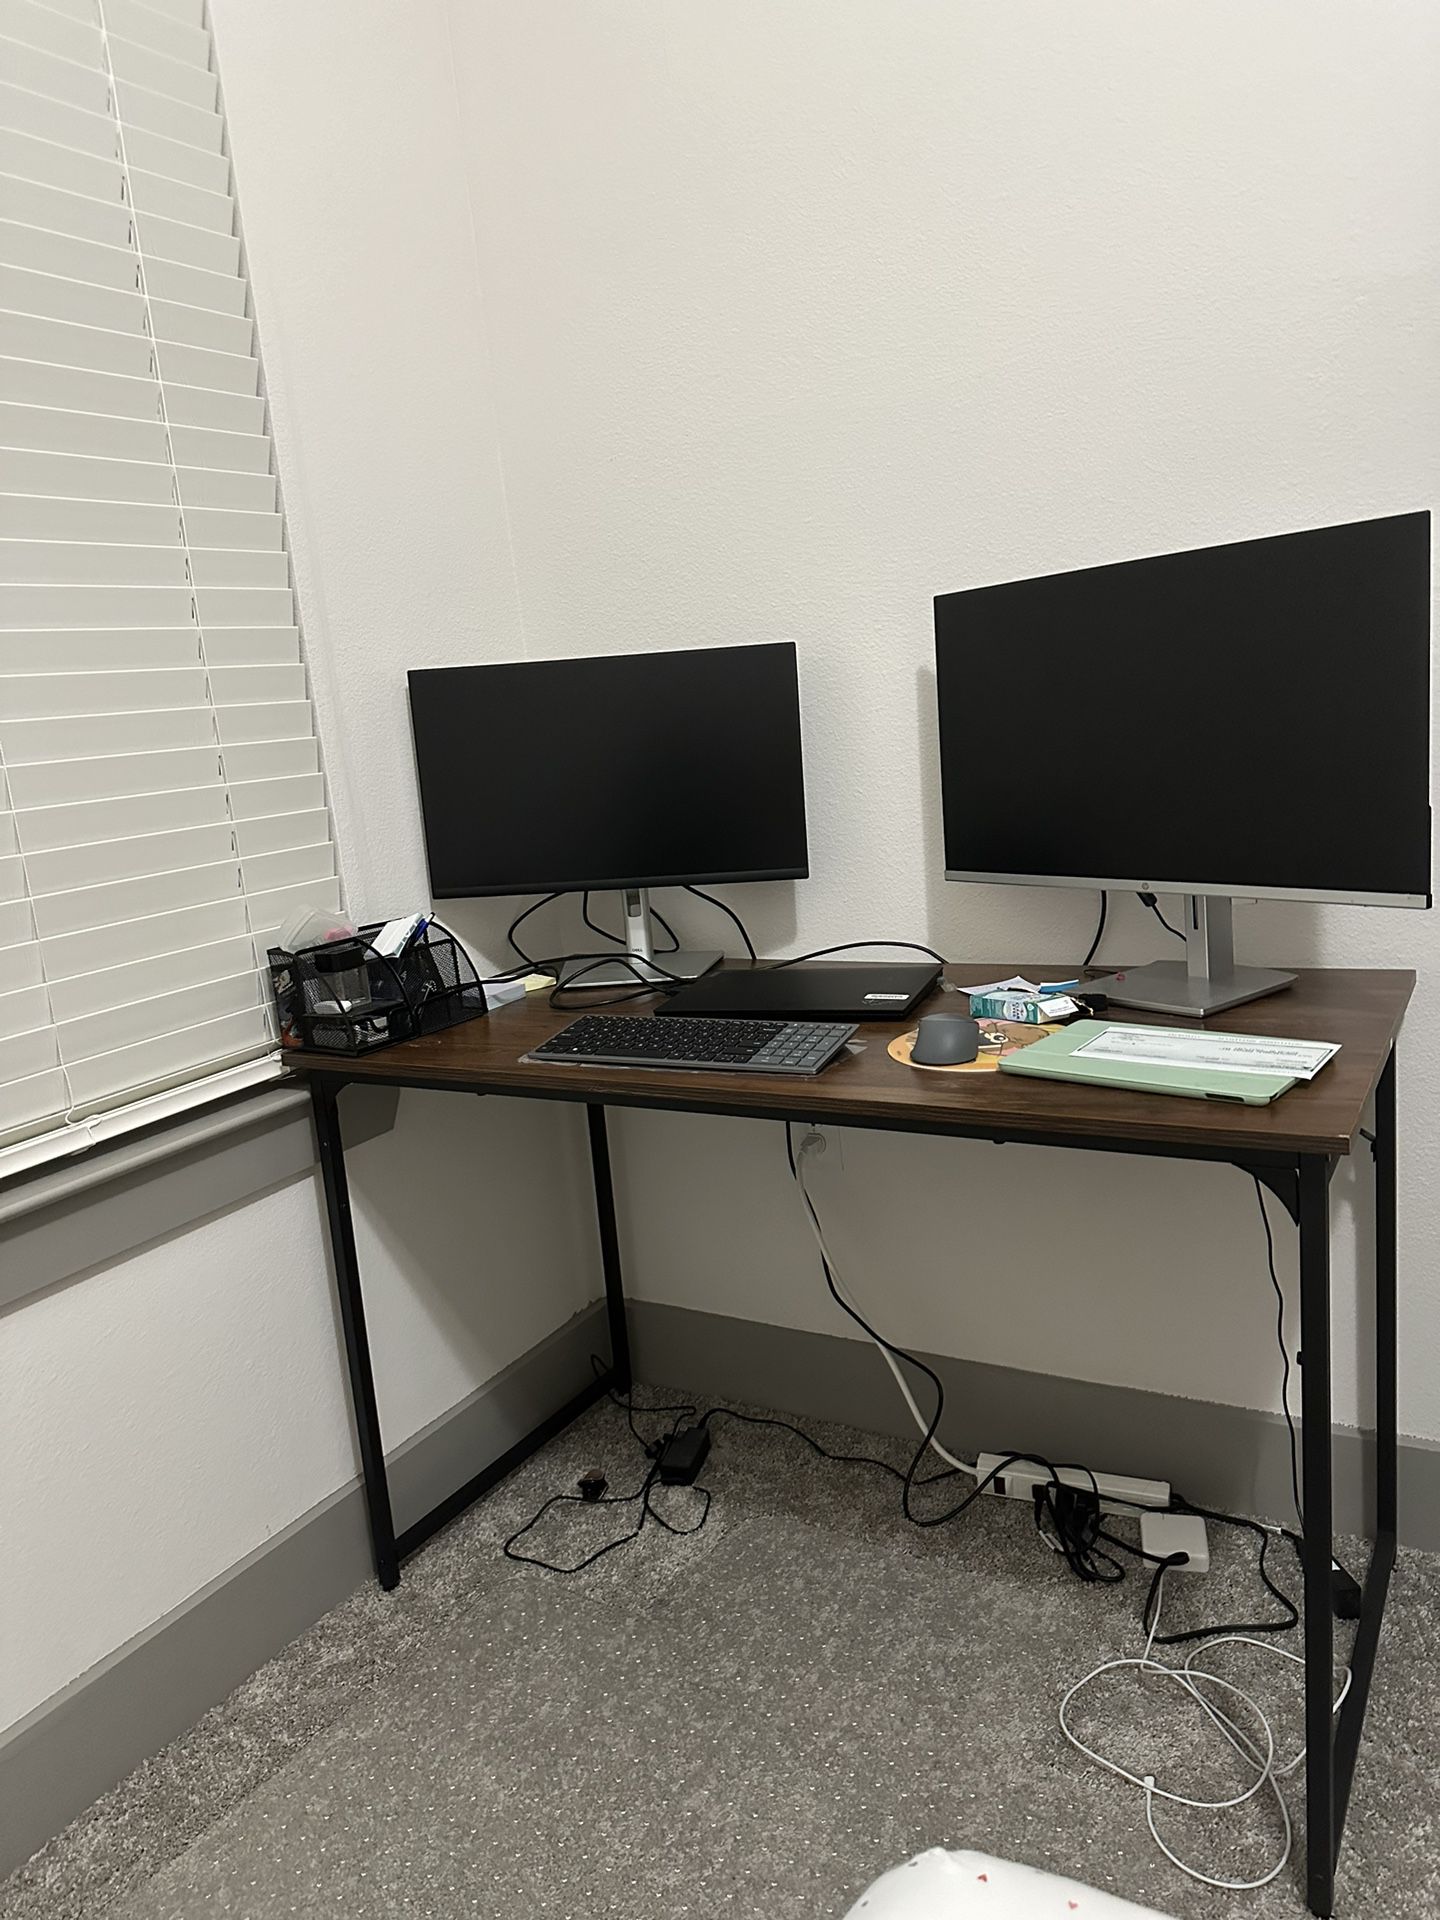 Computer Desk for Sale